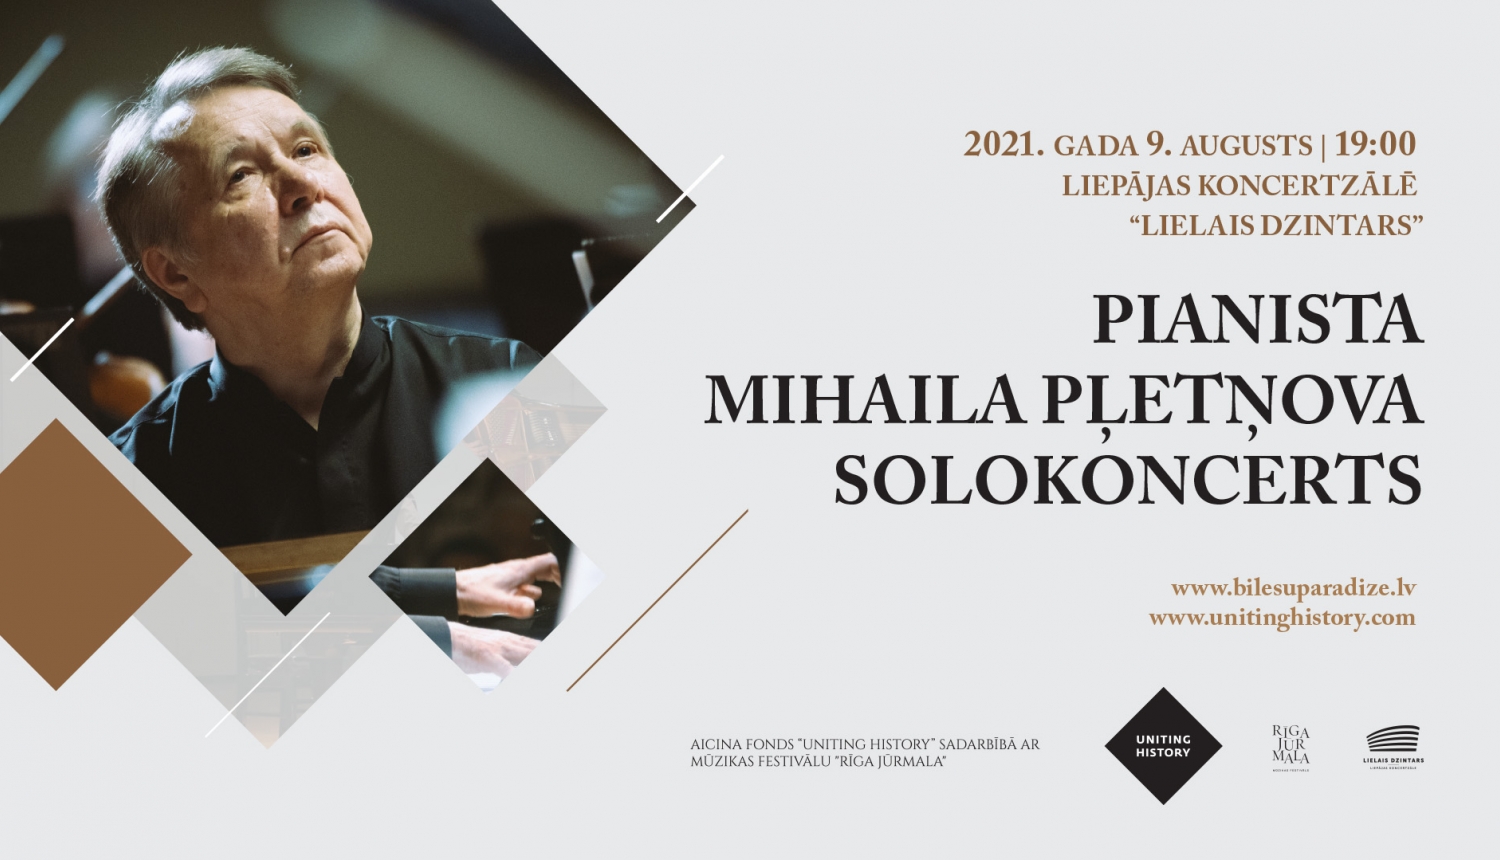 Pianista Mihaila Pļetņova solo koncerta vizuālais materiāls